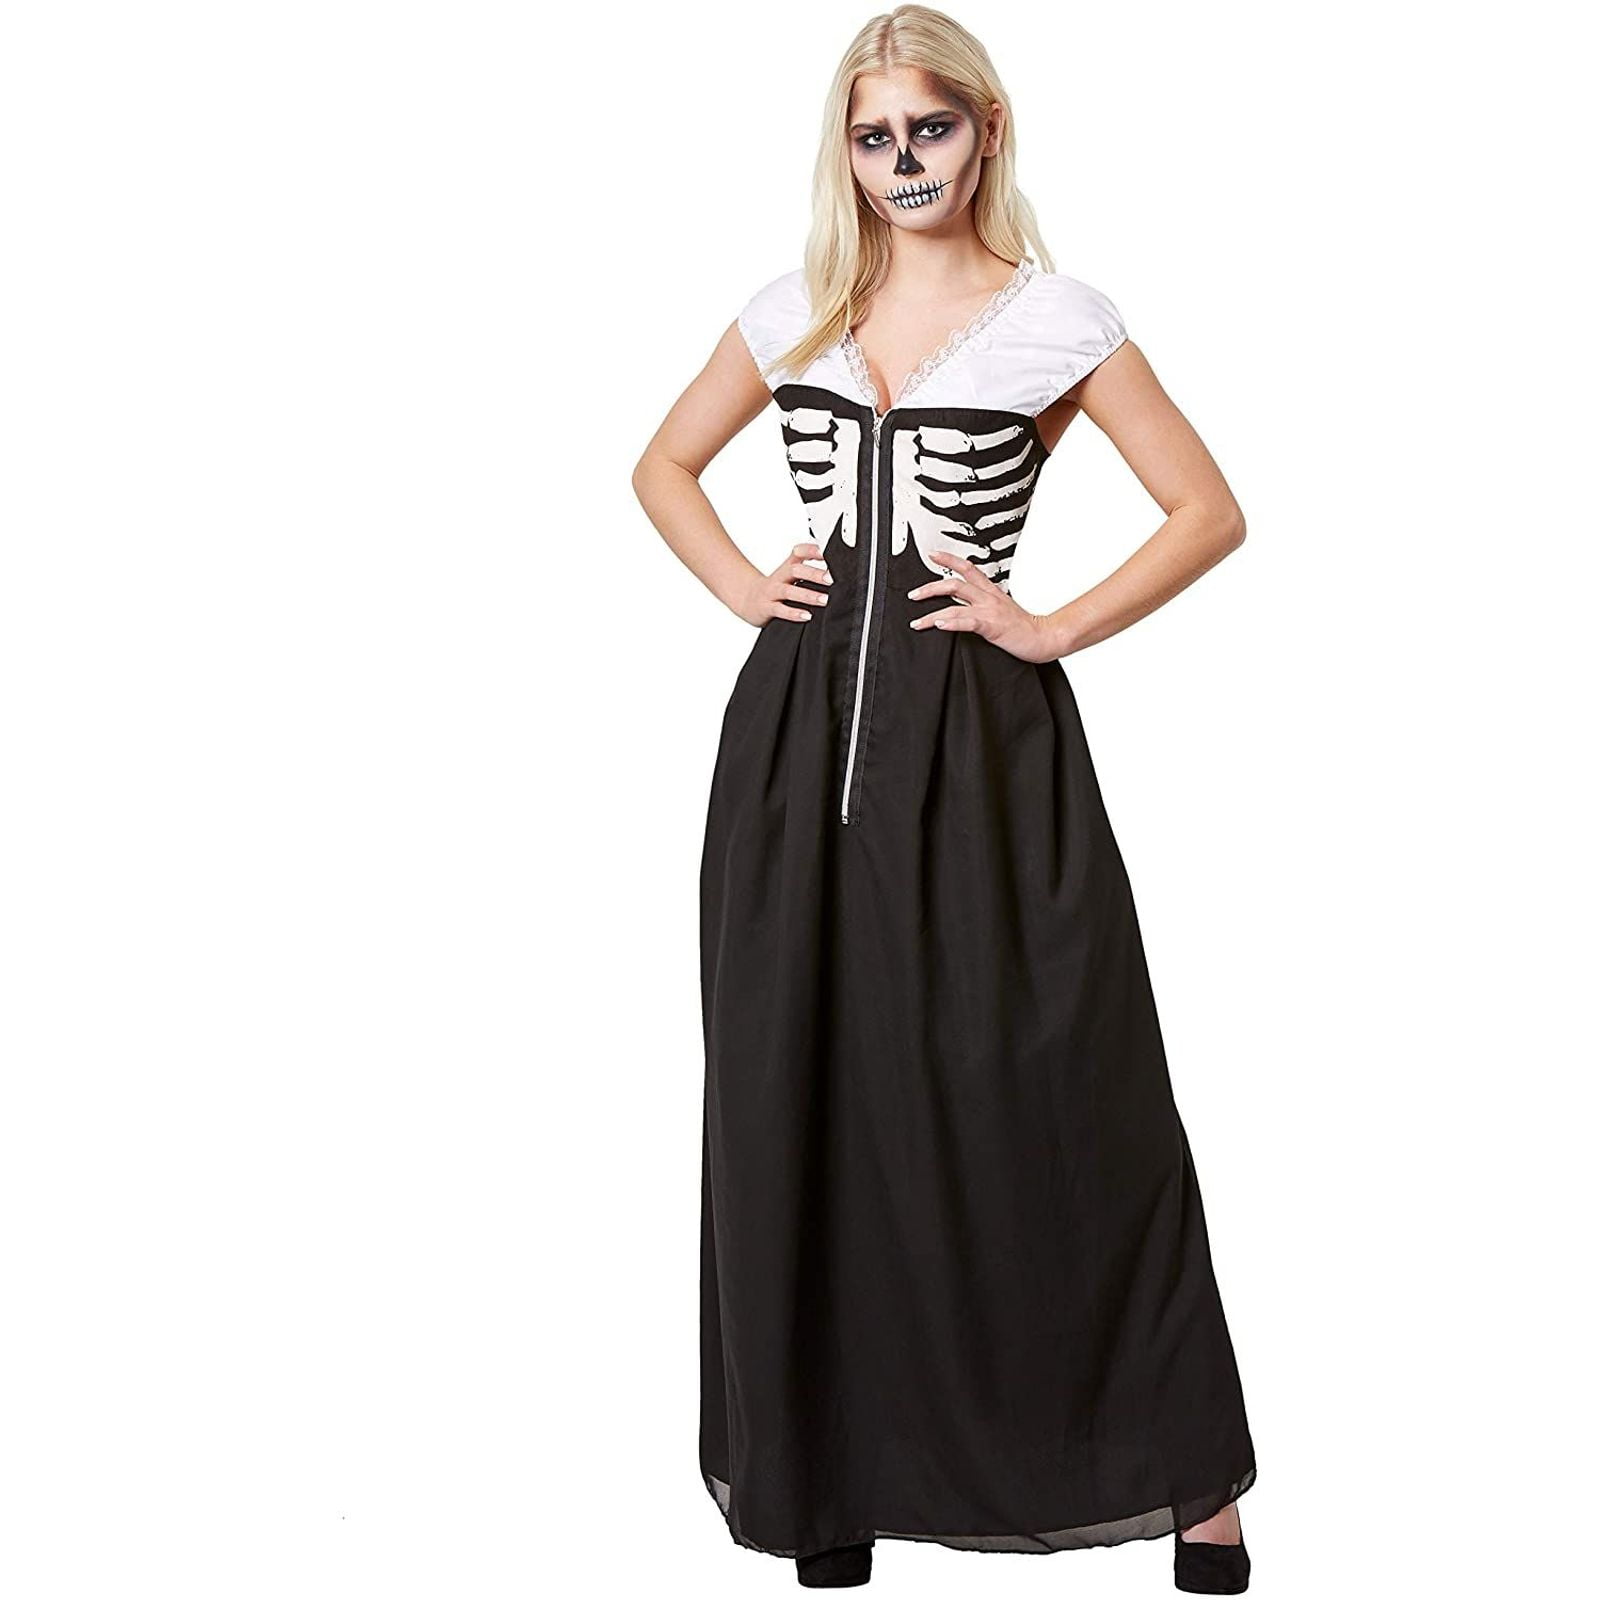 Sassy Skeleton Day Of The Dead Halloween Fancy Dress Costume Teen 8-14 Years 